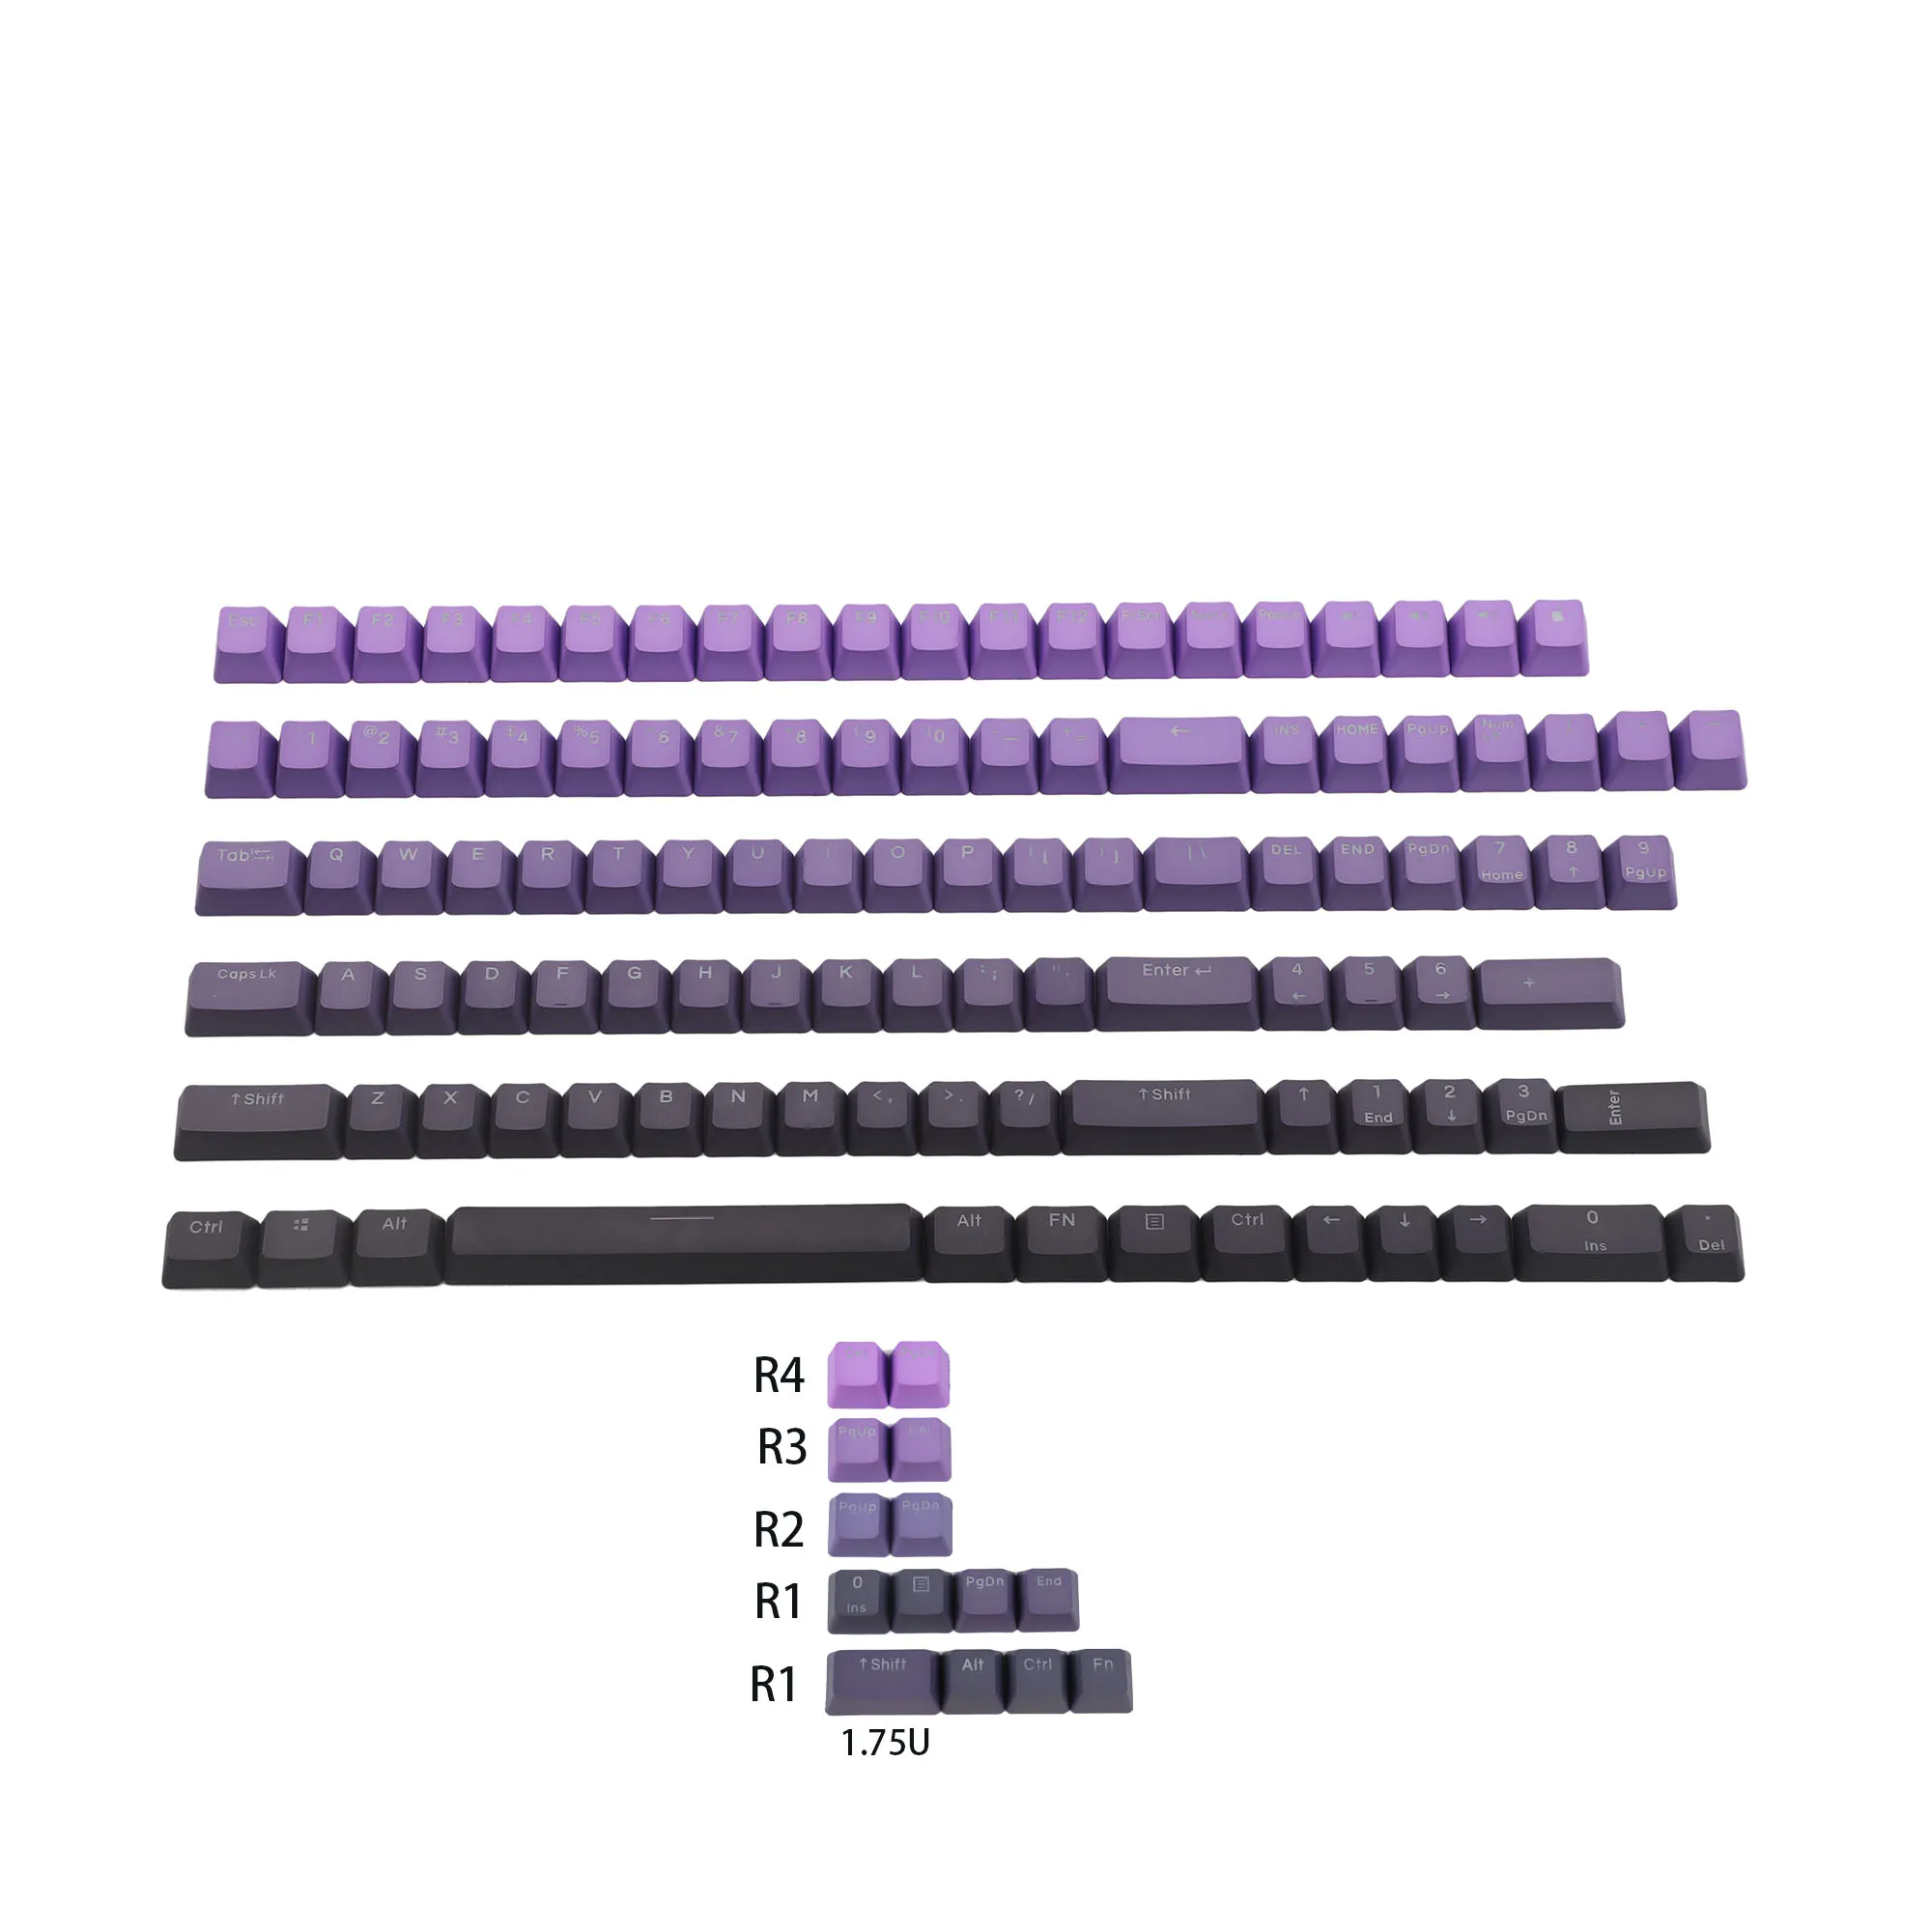 122 YMDK Double Shot Polar Purple Gradient Backlit Keycaps PBT OEM Profile Keycap For MX Mechanical 5 - Pudding Keycap